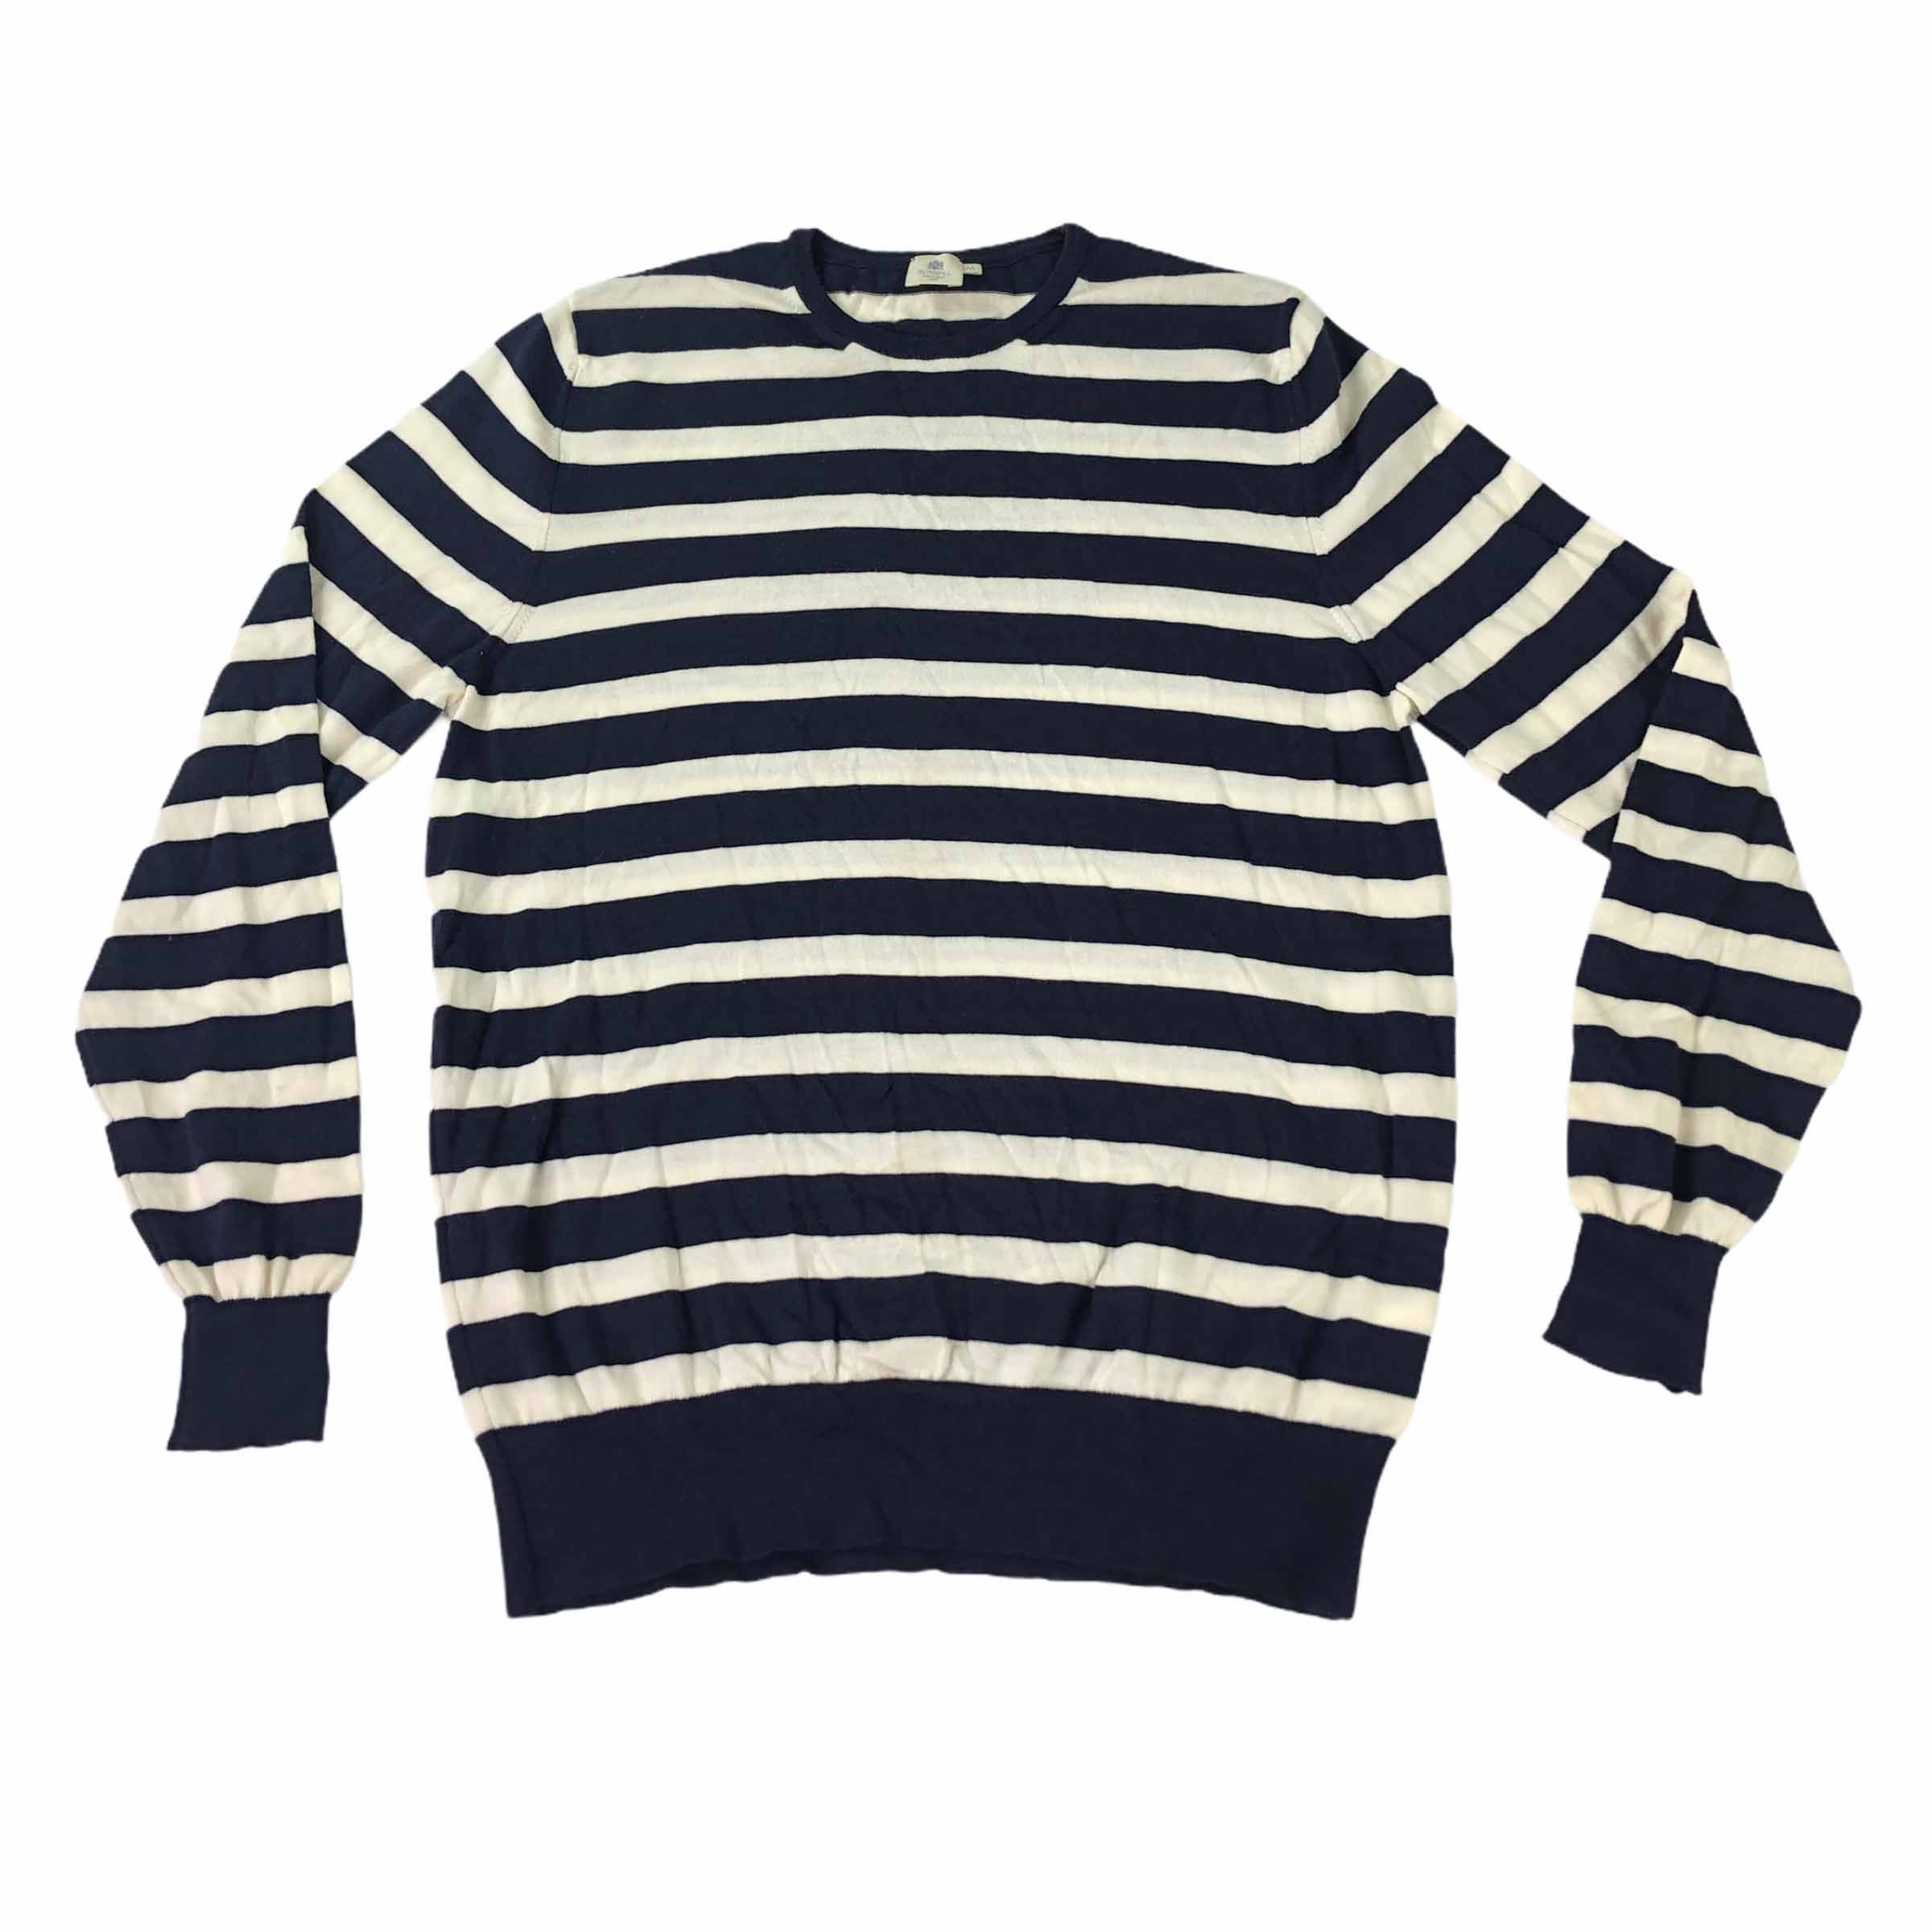 [Marc by Marc Jacobs] Stripe Knit - Size XS